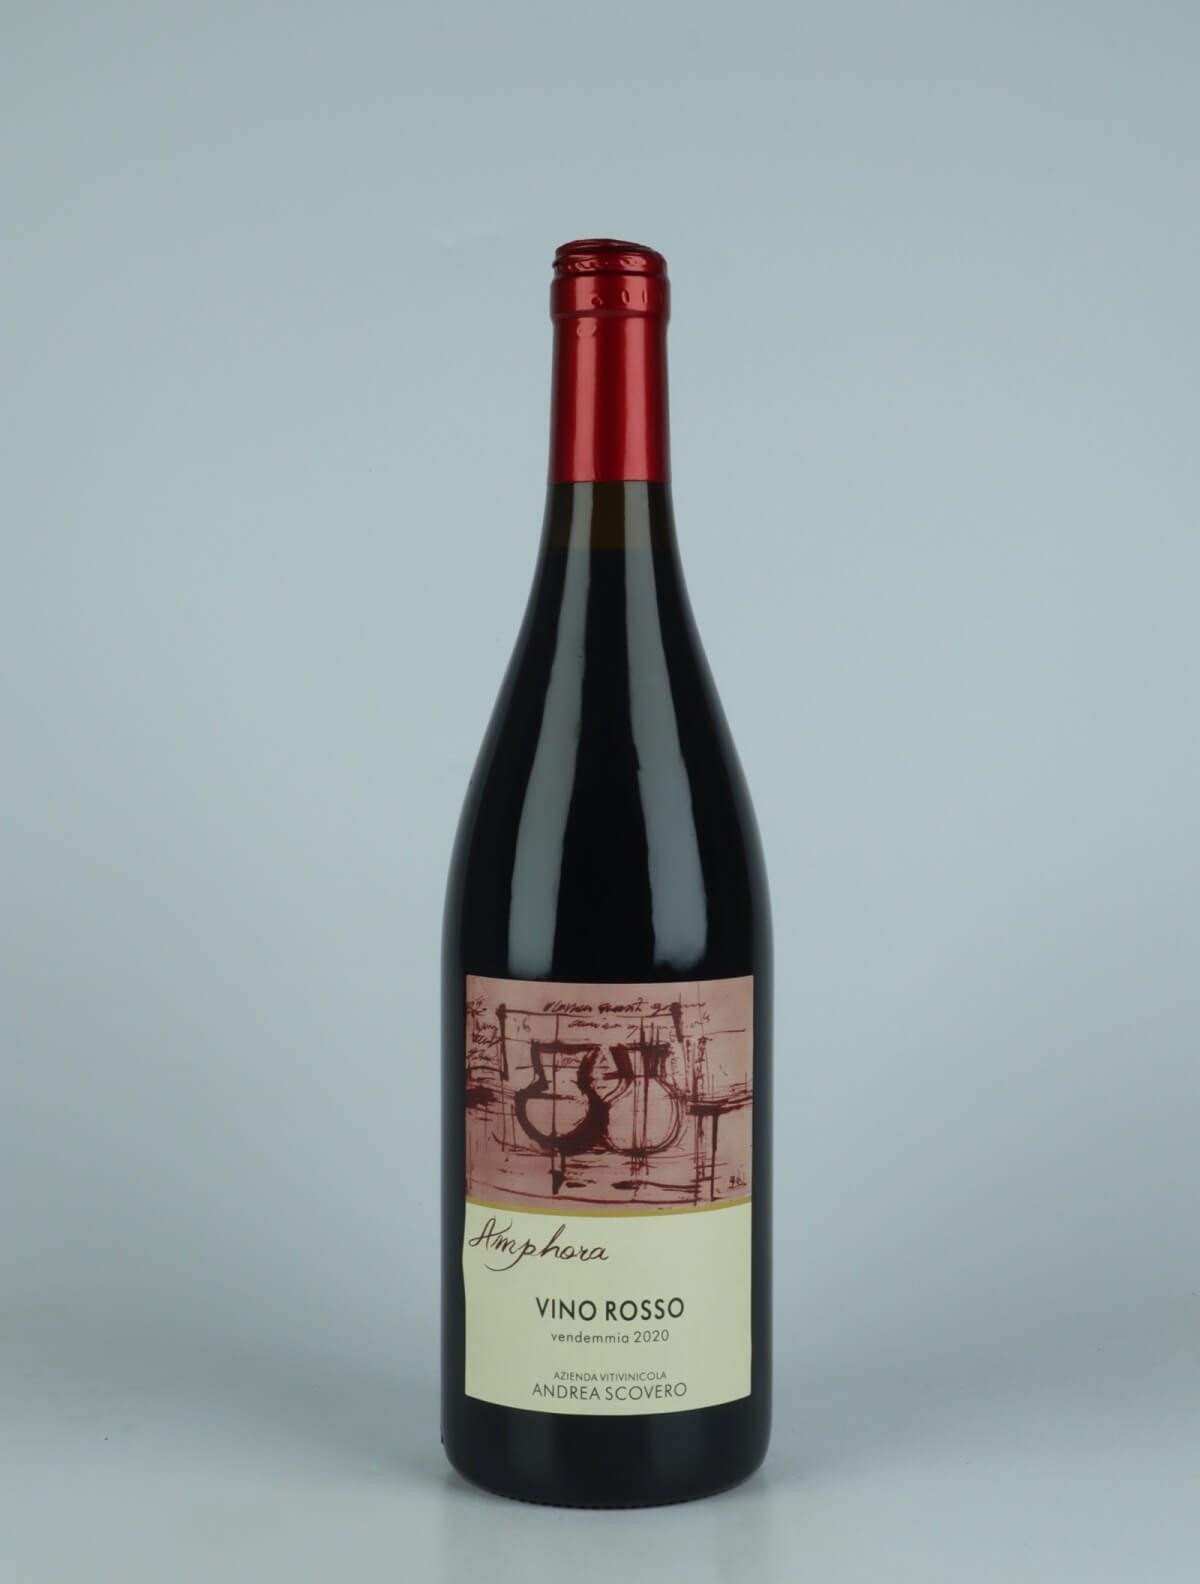 En flaske 2020 Vino Rosso - Amphora Rødvin fra Andrea Scovero, Piemonte i Italien